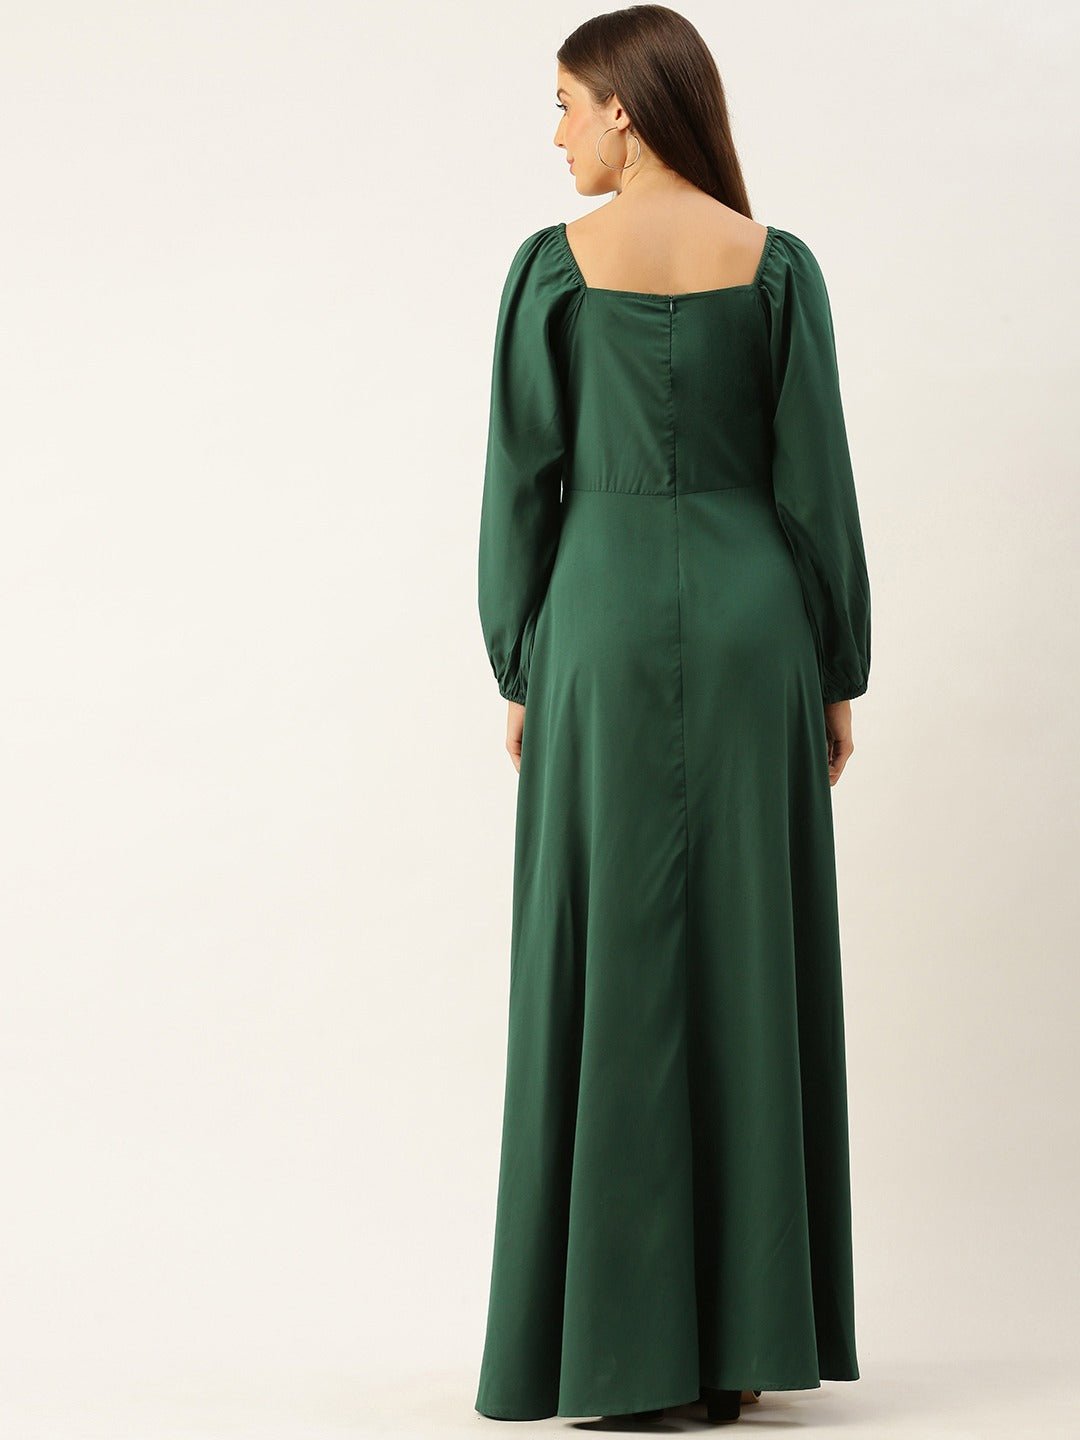 Folk Republic Women Solid Green Square Neck Slim-Fit Maxi Dress - #folk republic#